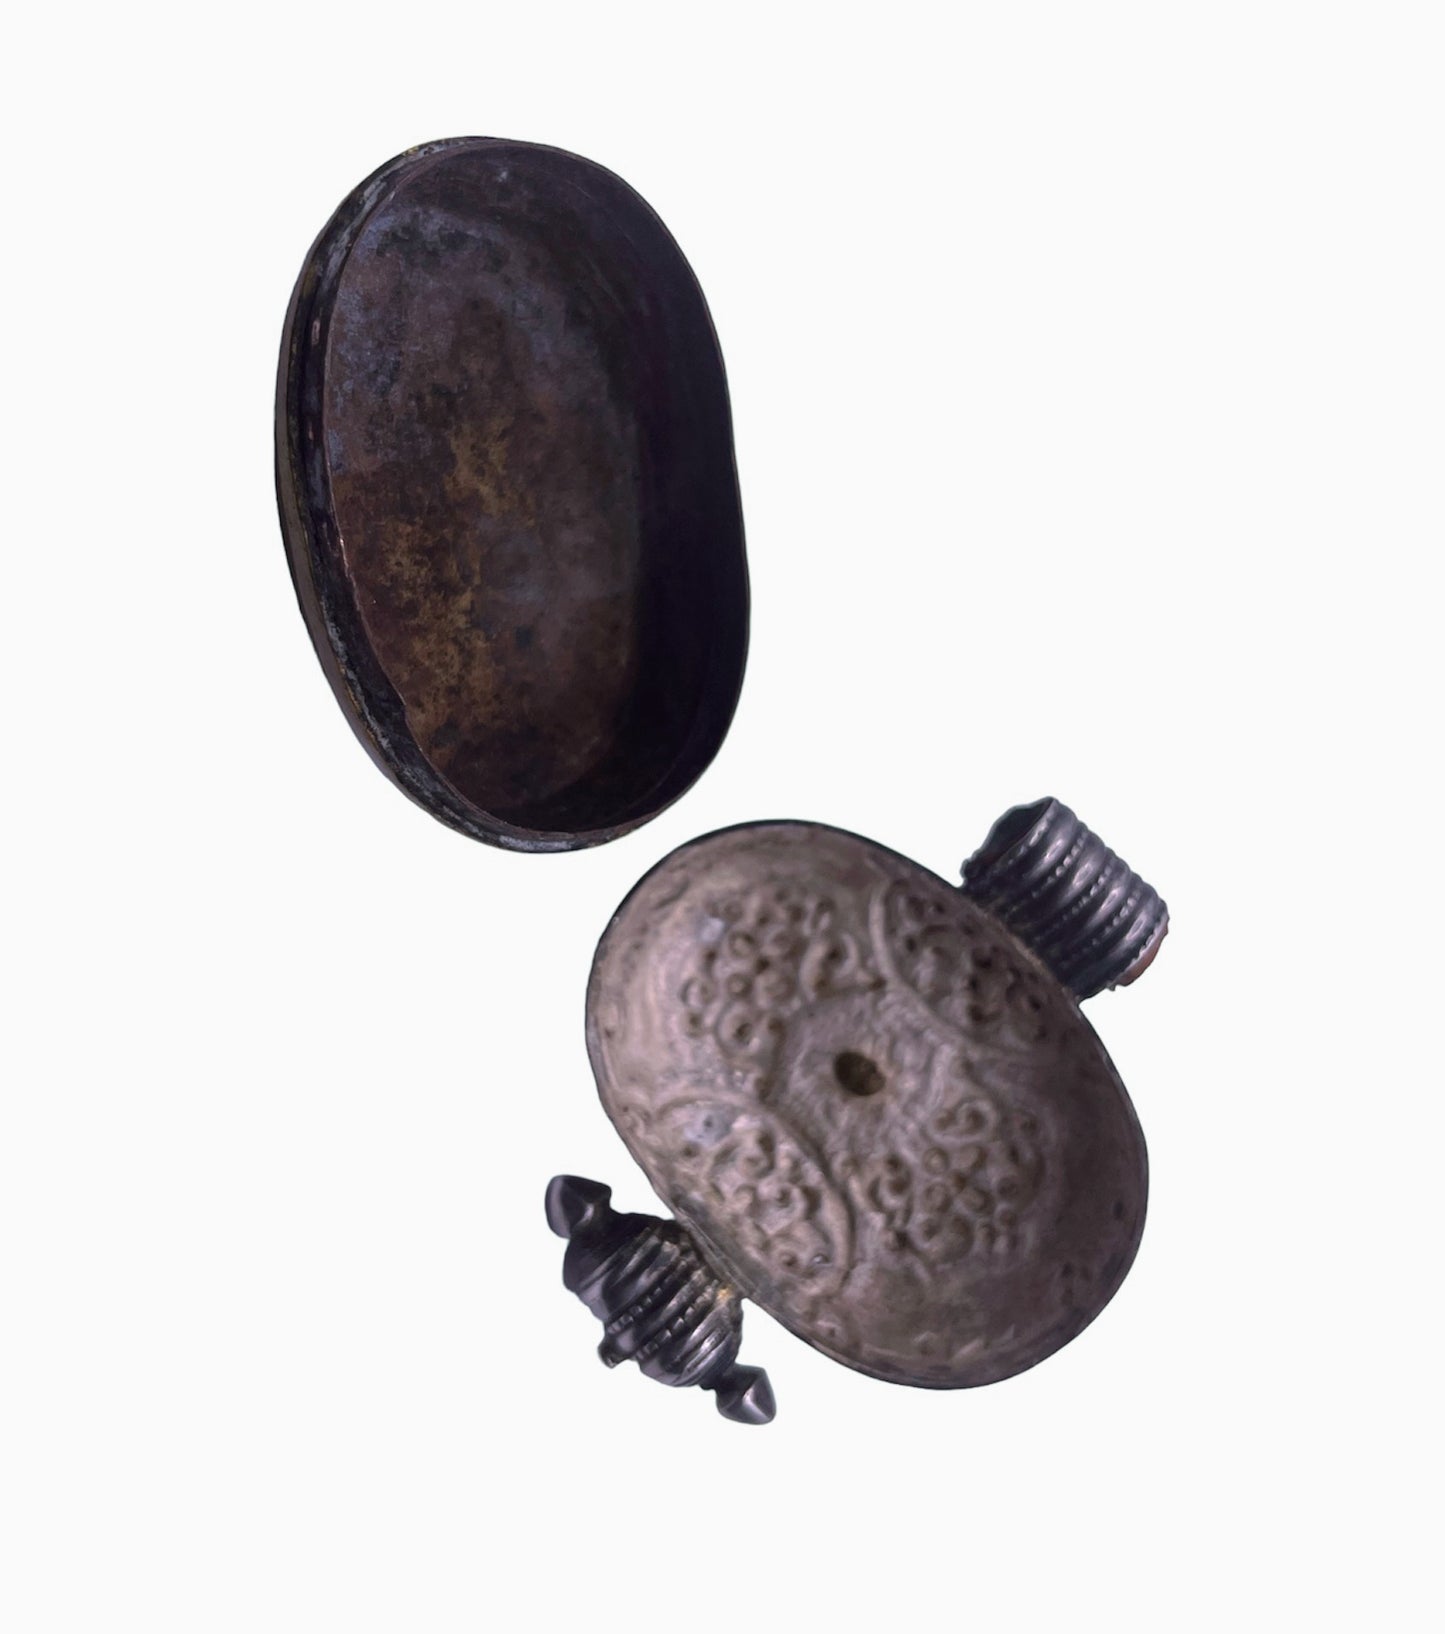 An antique silver and coral ghau amulet